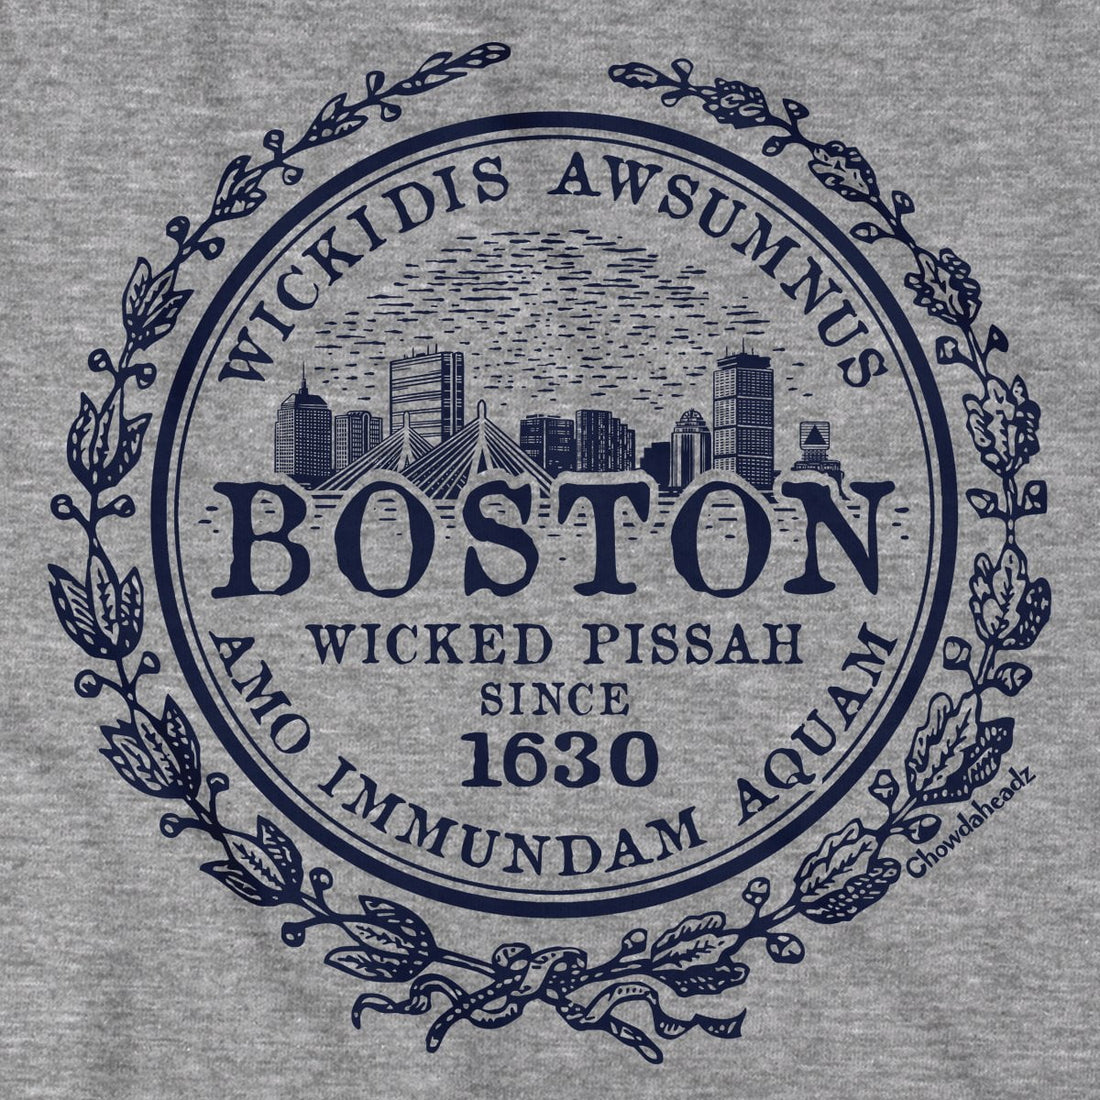 Chowdaheadz-T-Shirts 617 Boston Area Code Ladies T-Shirt